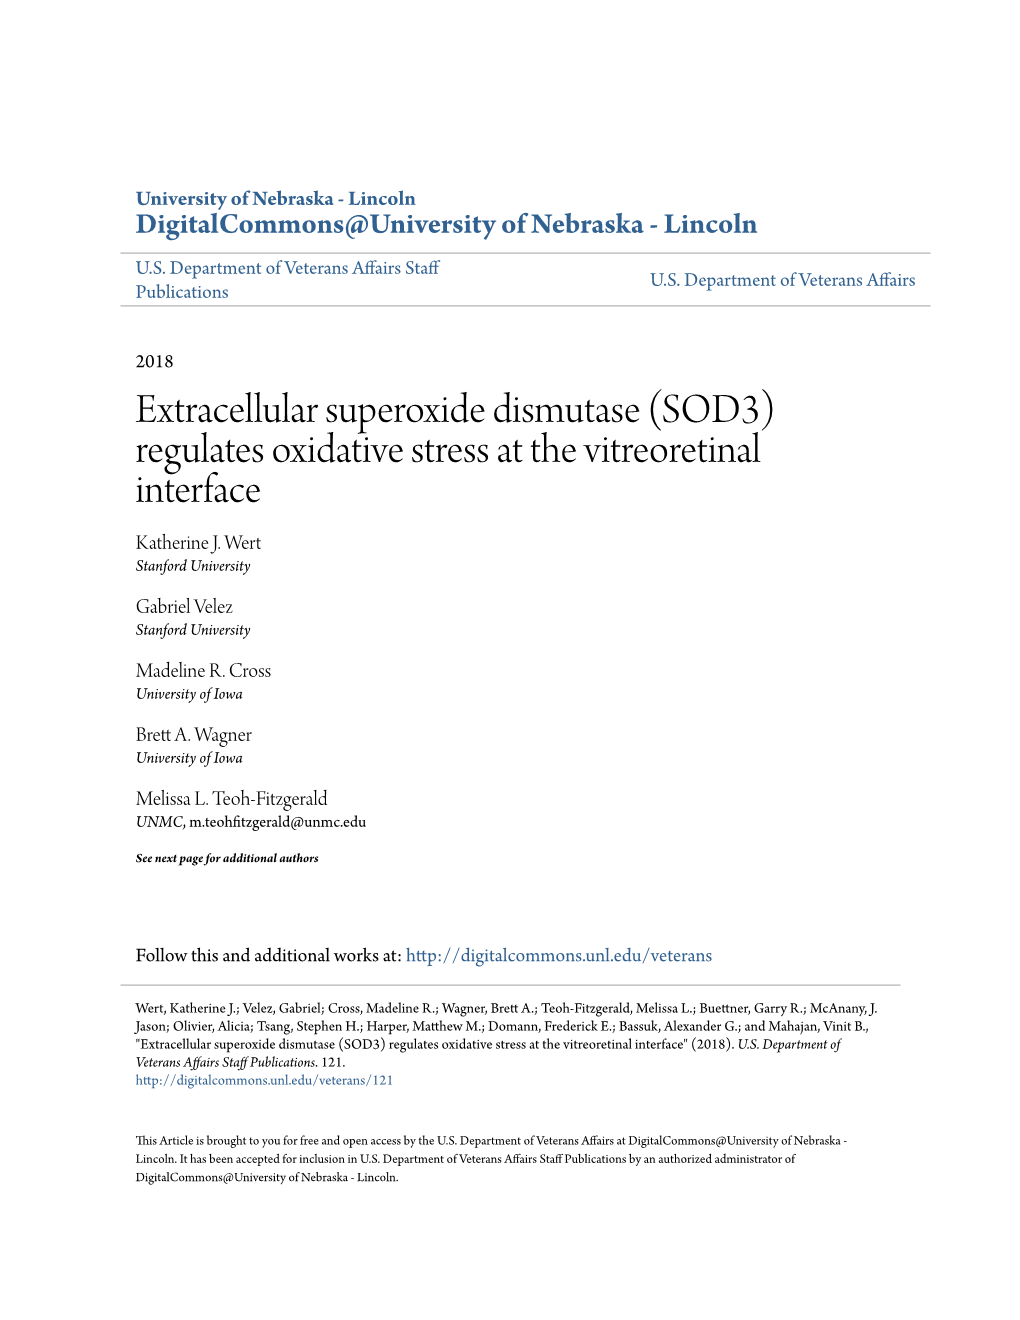 (SOD3) Regulates Oxidative Stress at the Vitreoretinal Interface Katherine J